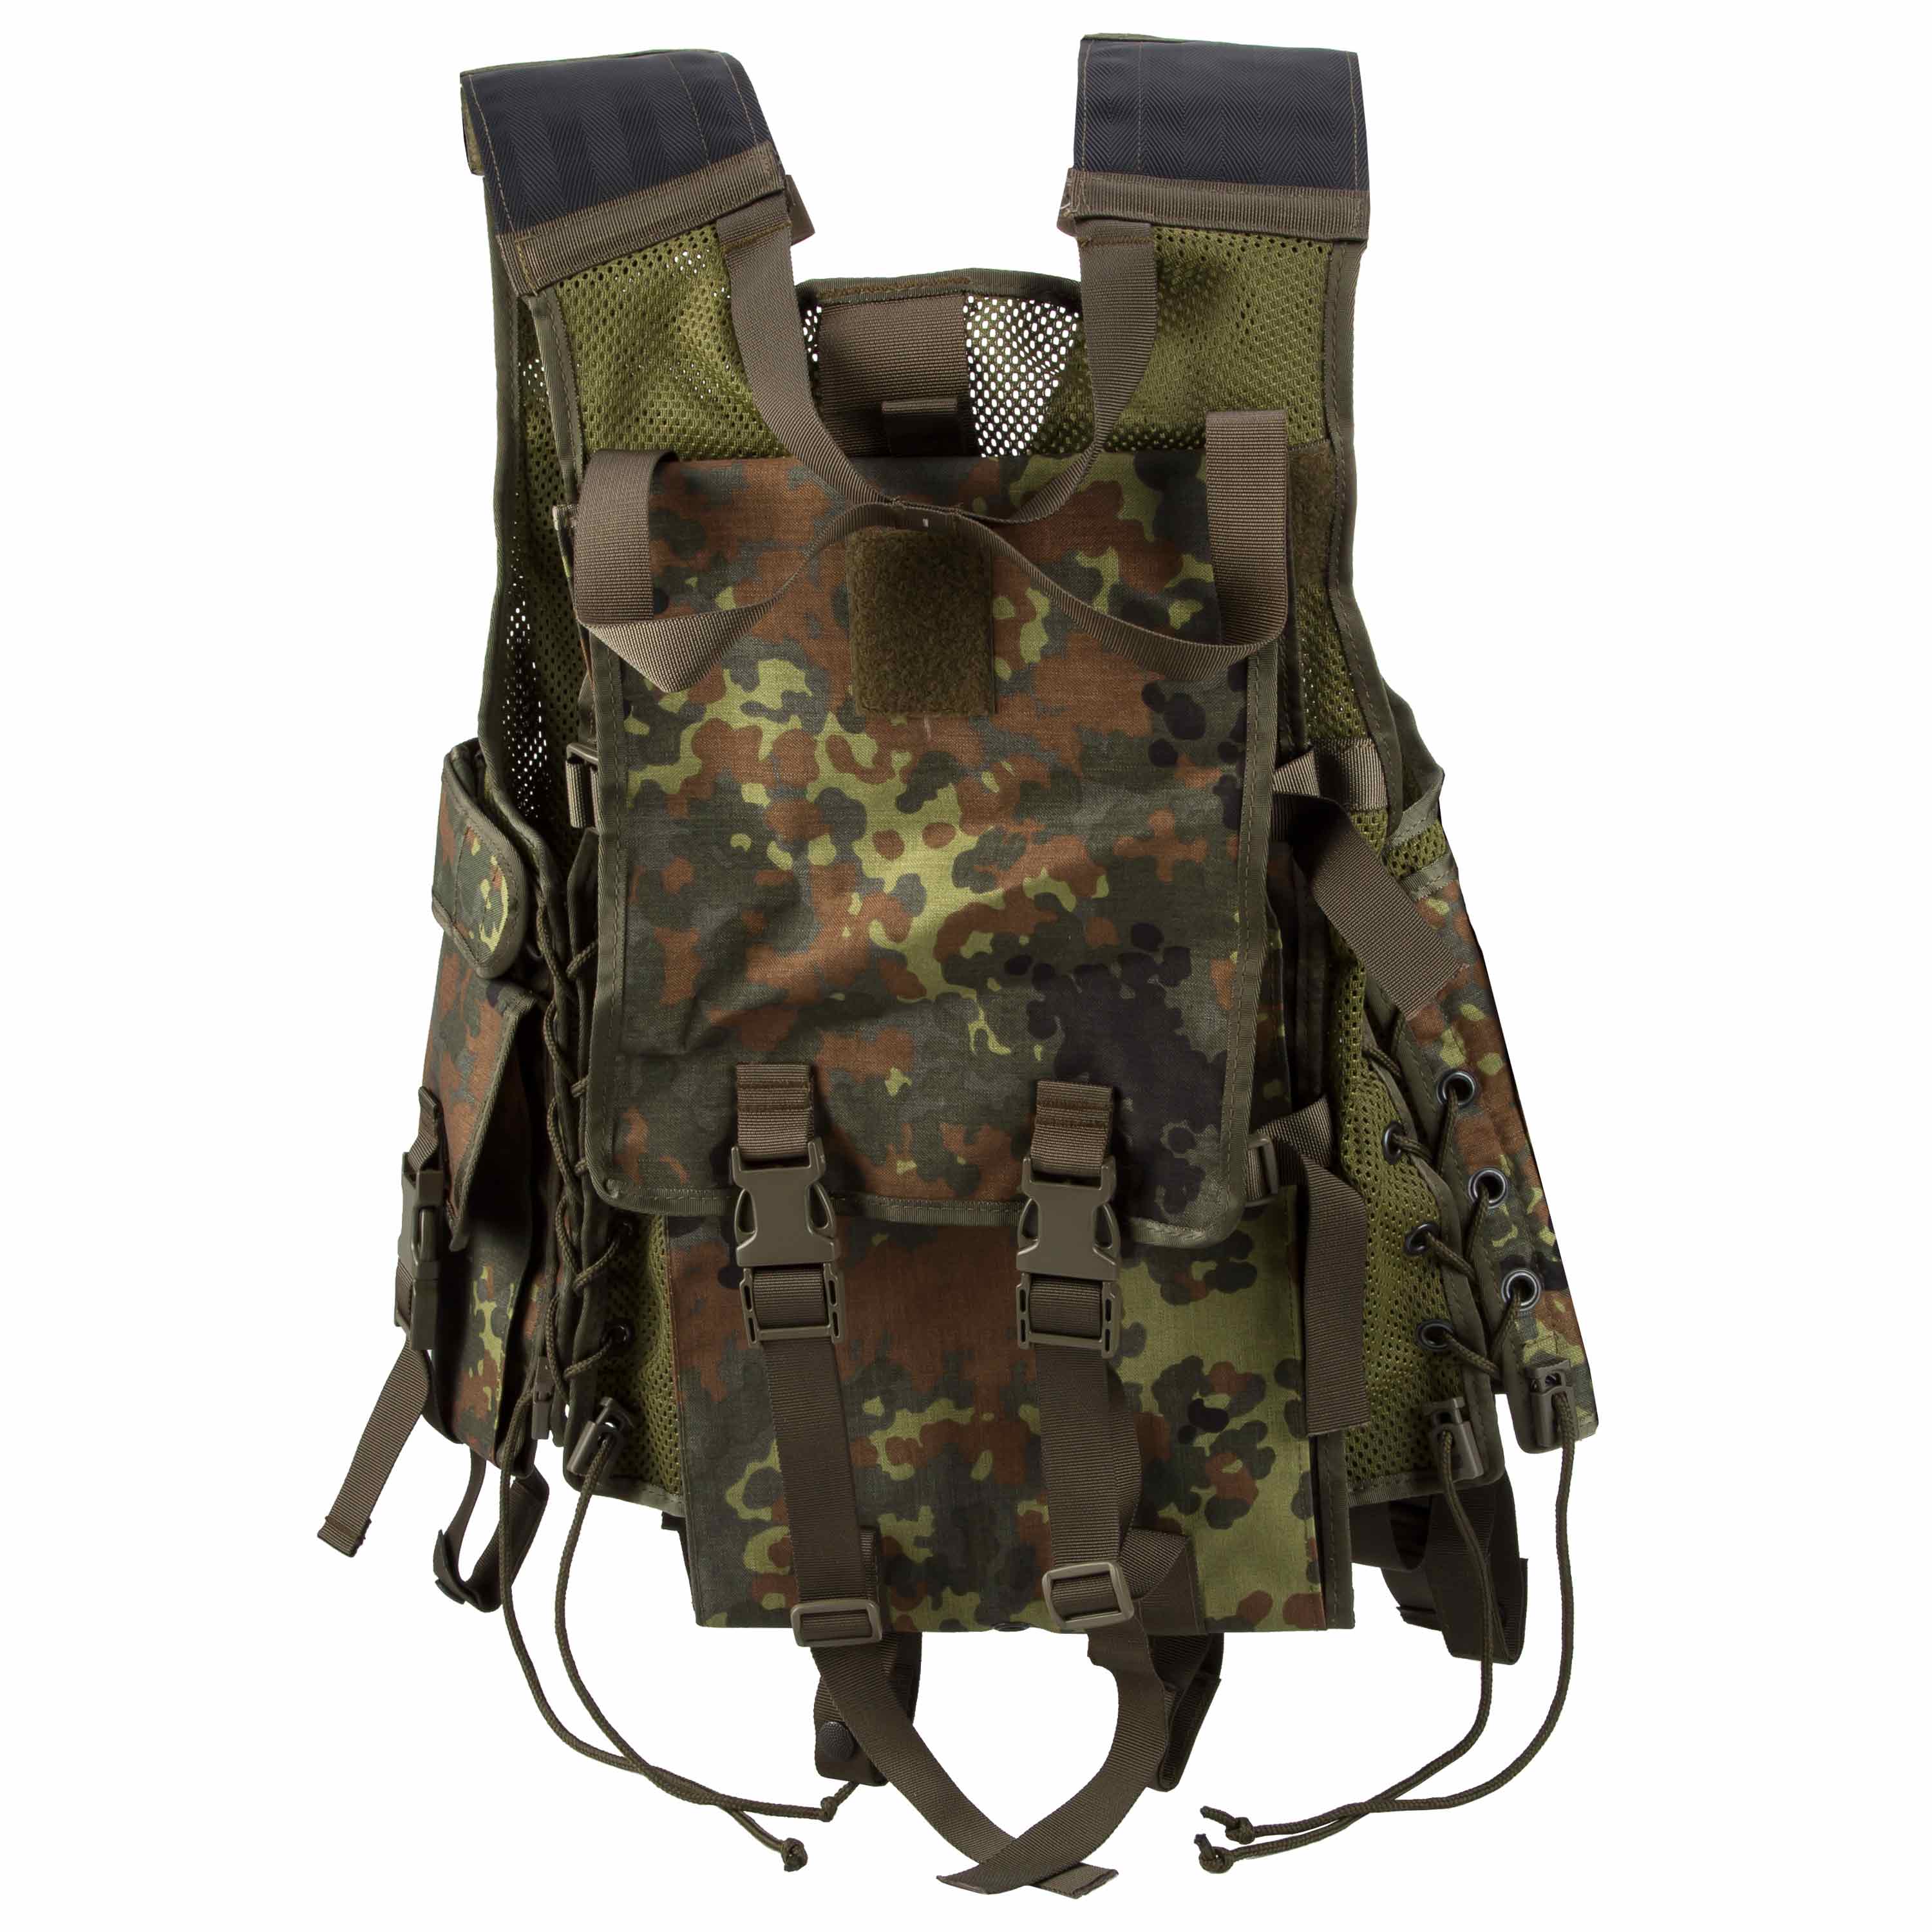 Purchase the Heim Commando Vest Type II by ASMC